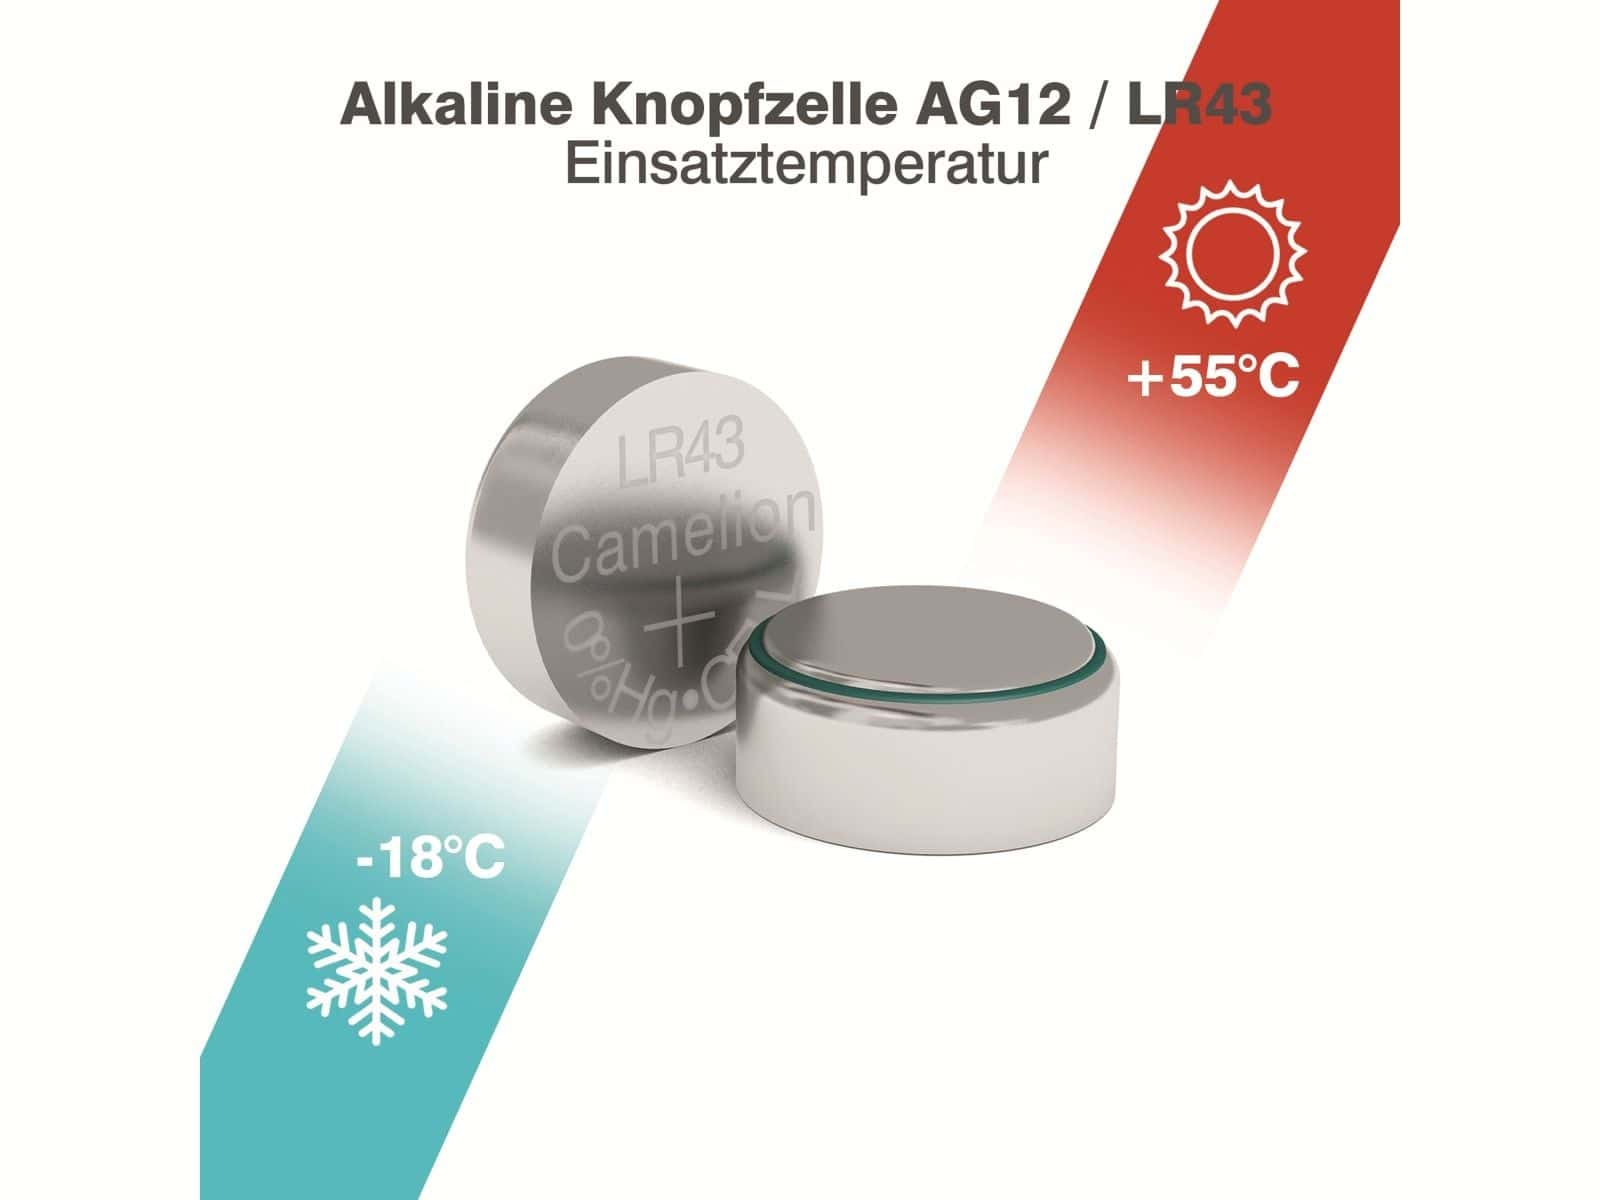 St. Alkaline AG12, Knopfzelle Knopfzelle 2 CAMELION